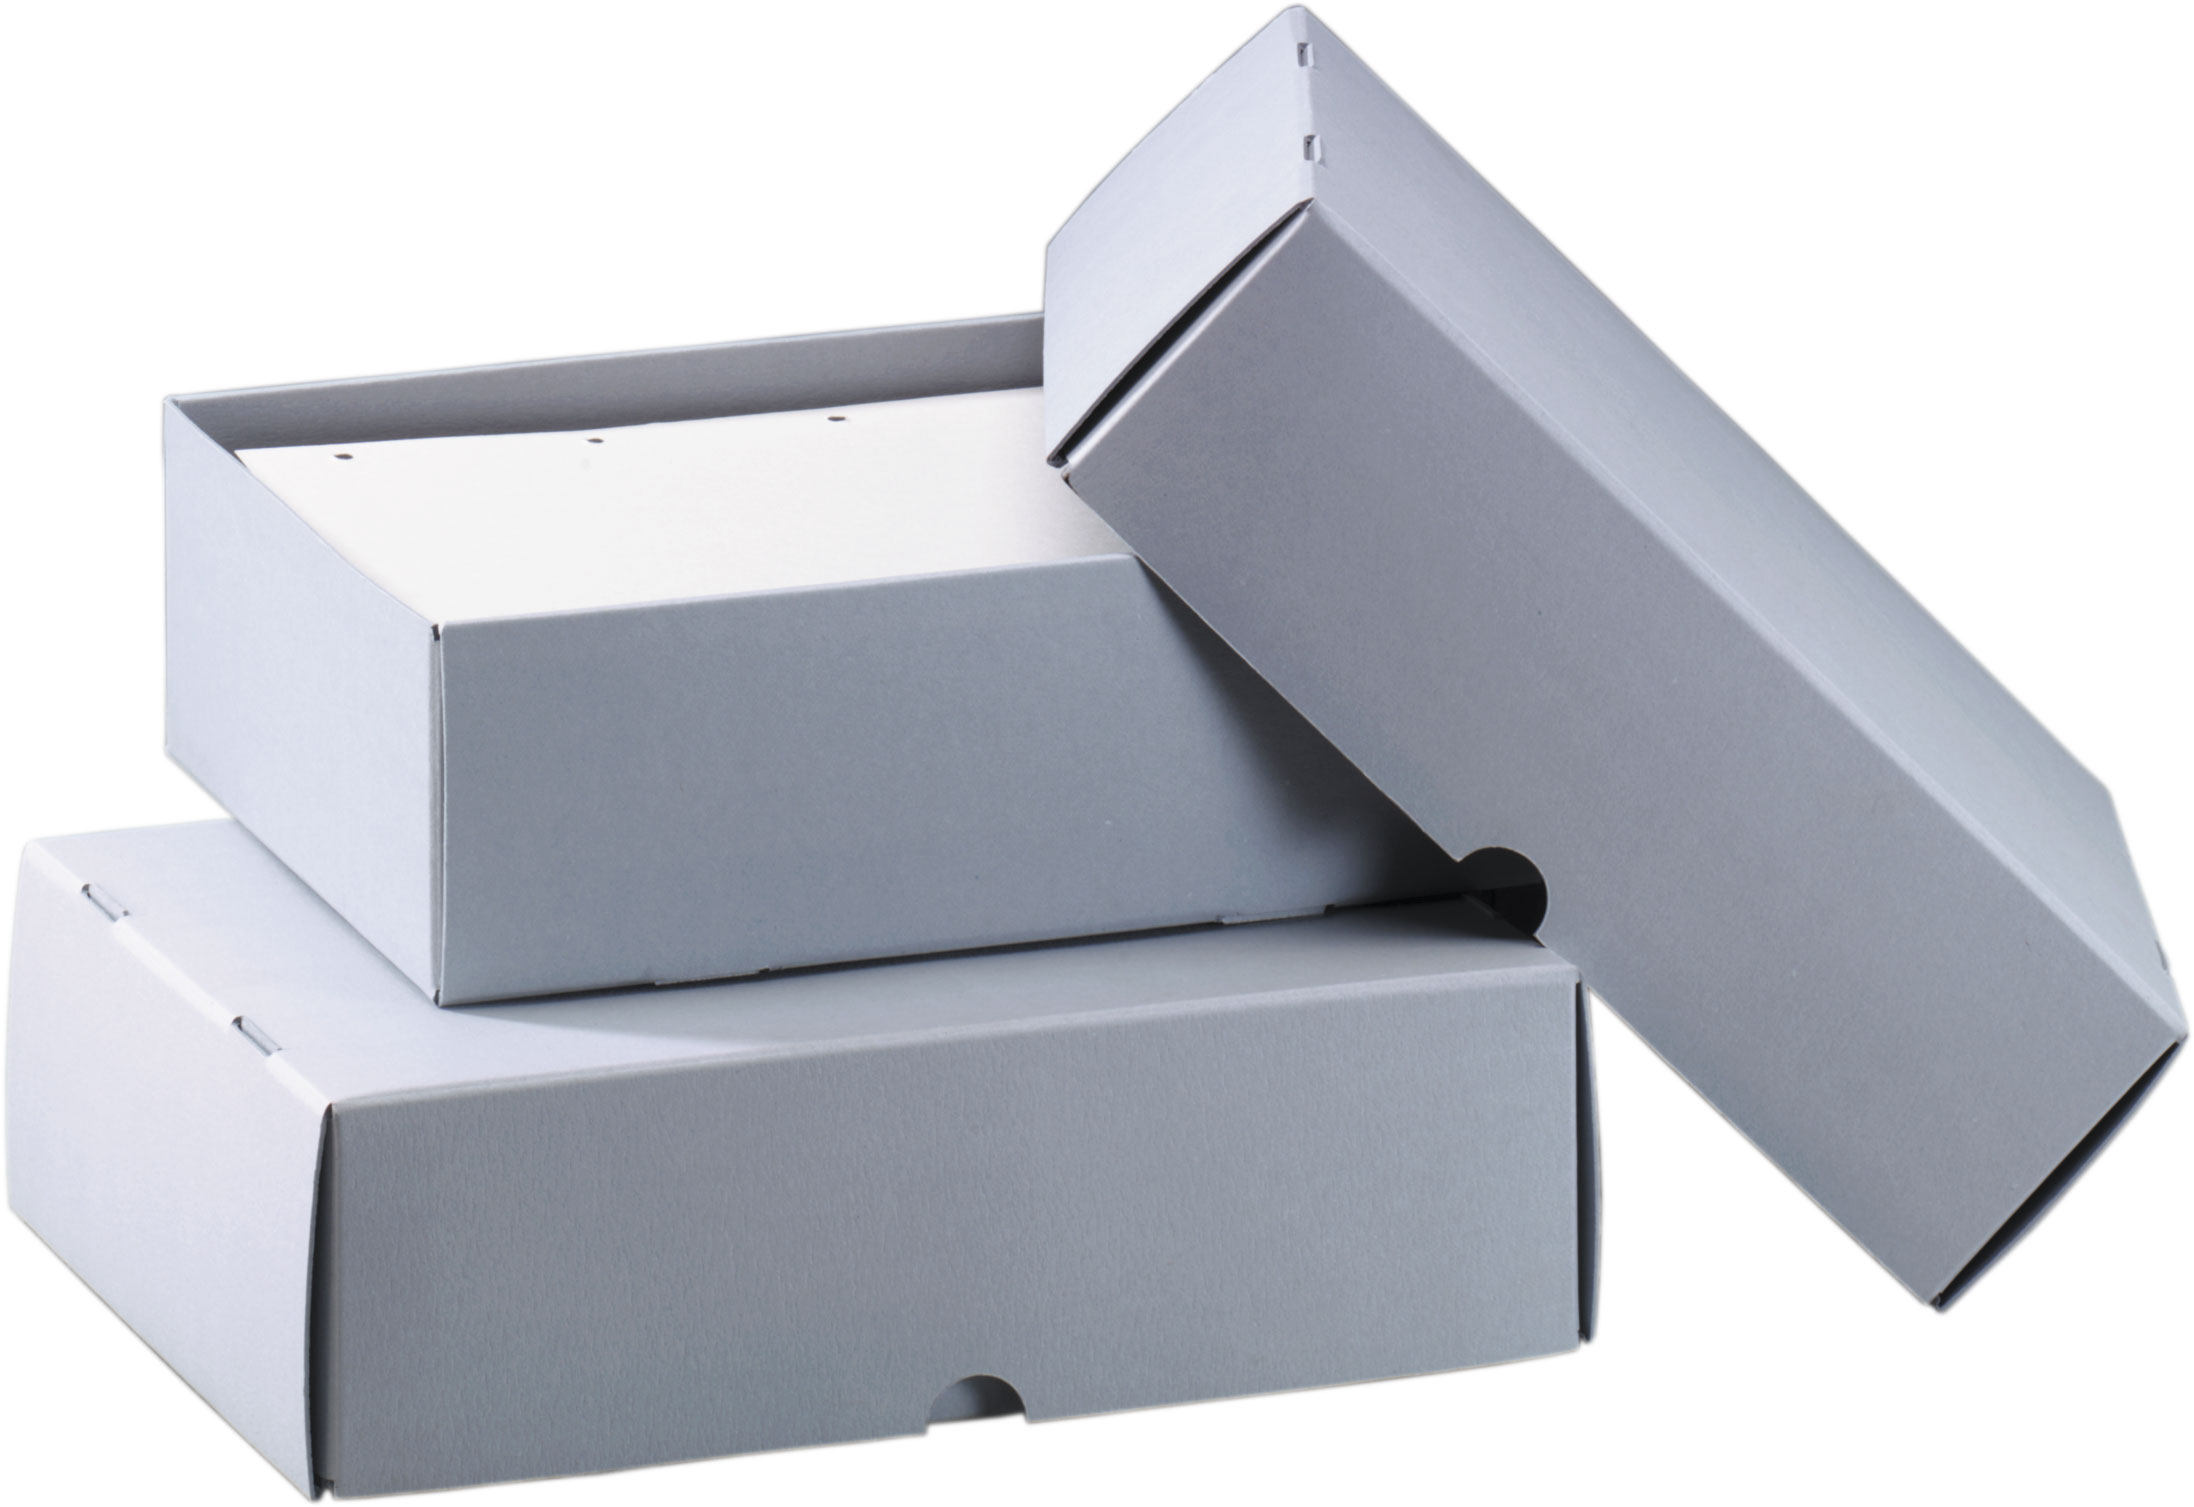 Storage box „Loreley“ - Large format I Premium